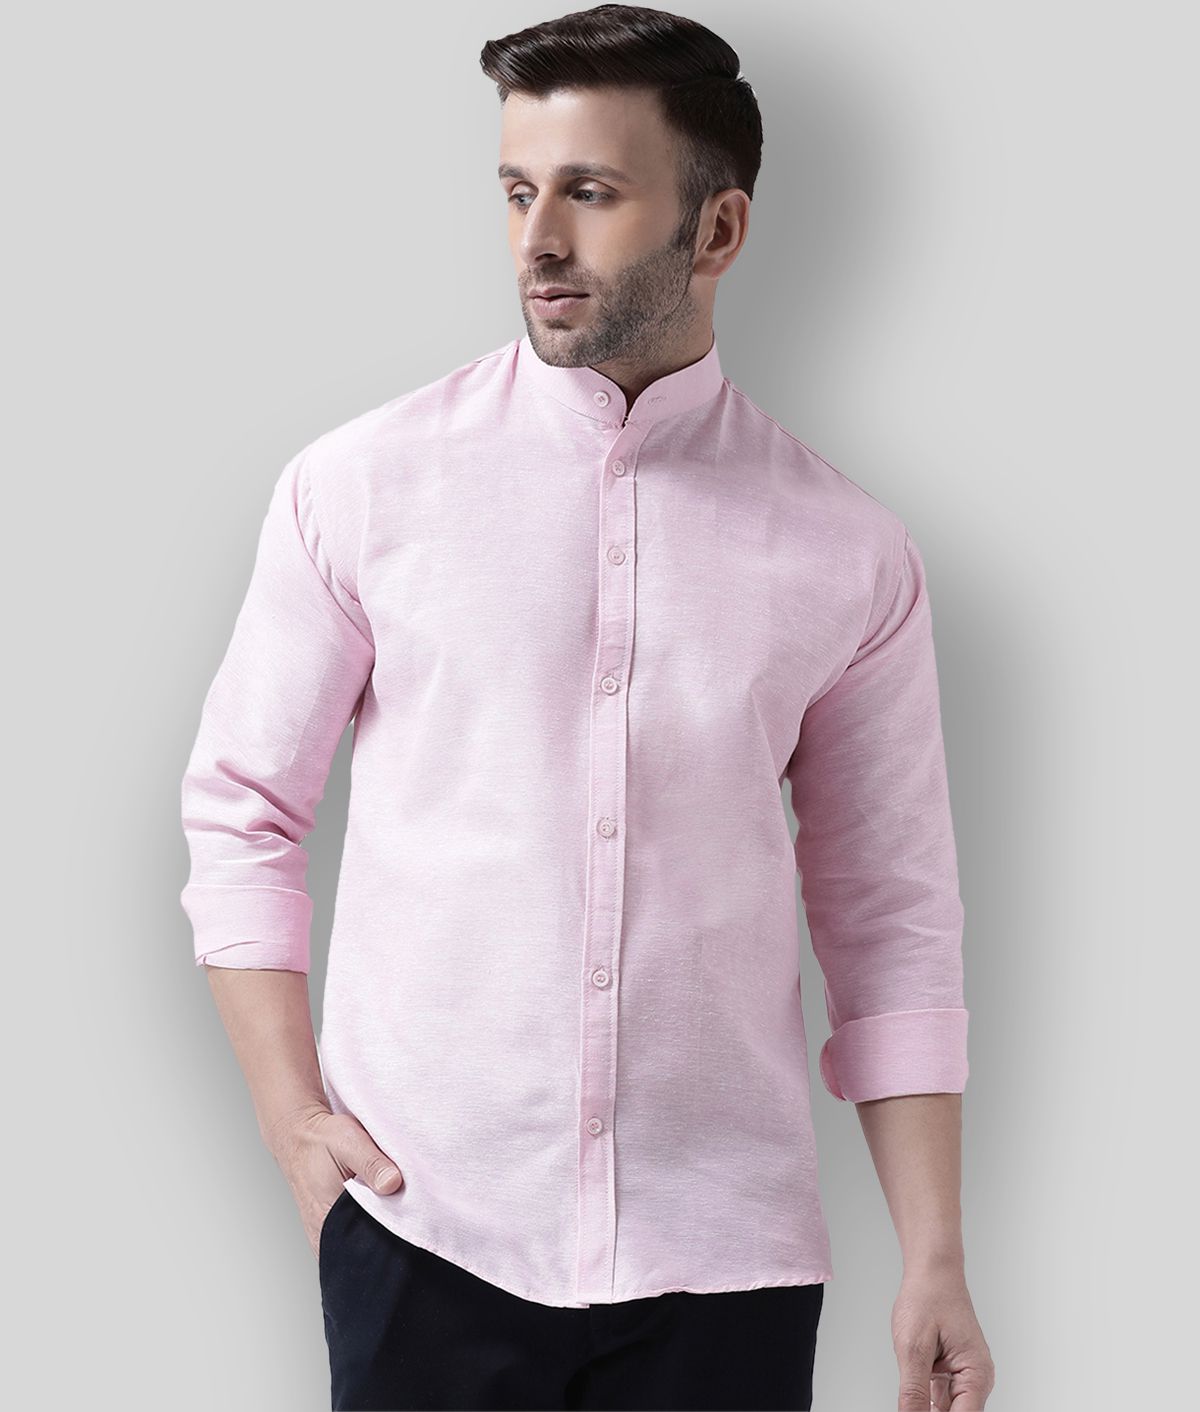 RIAG - Pink Cotton Regular Fit Men's Casual Shirt (Pack of 1 )